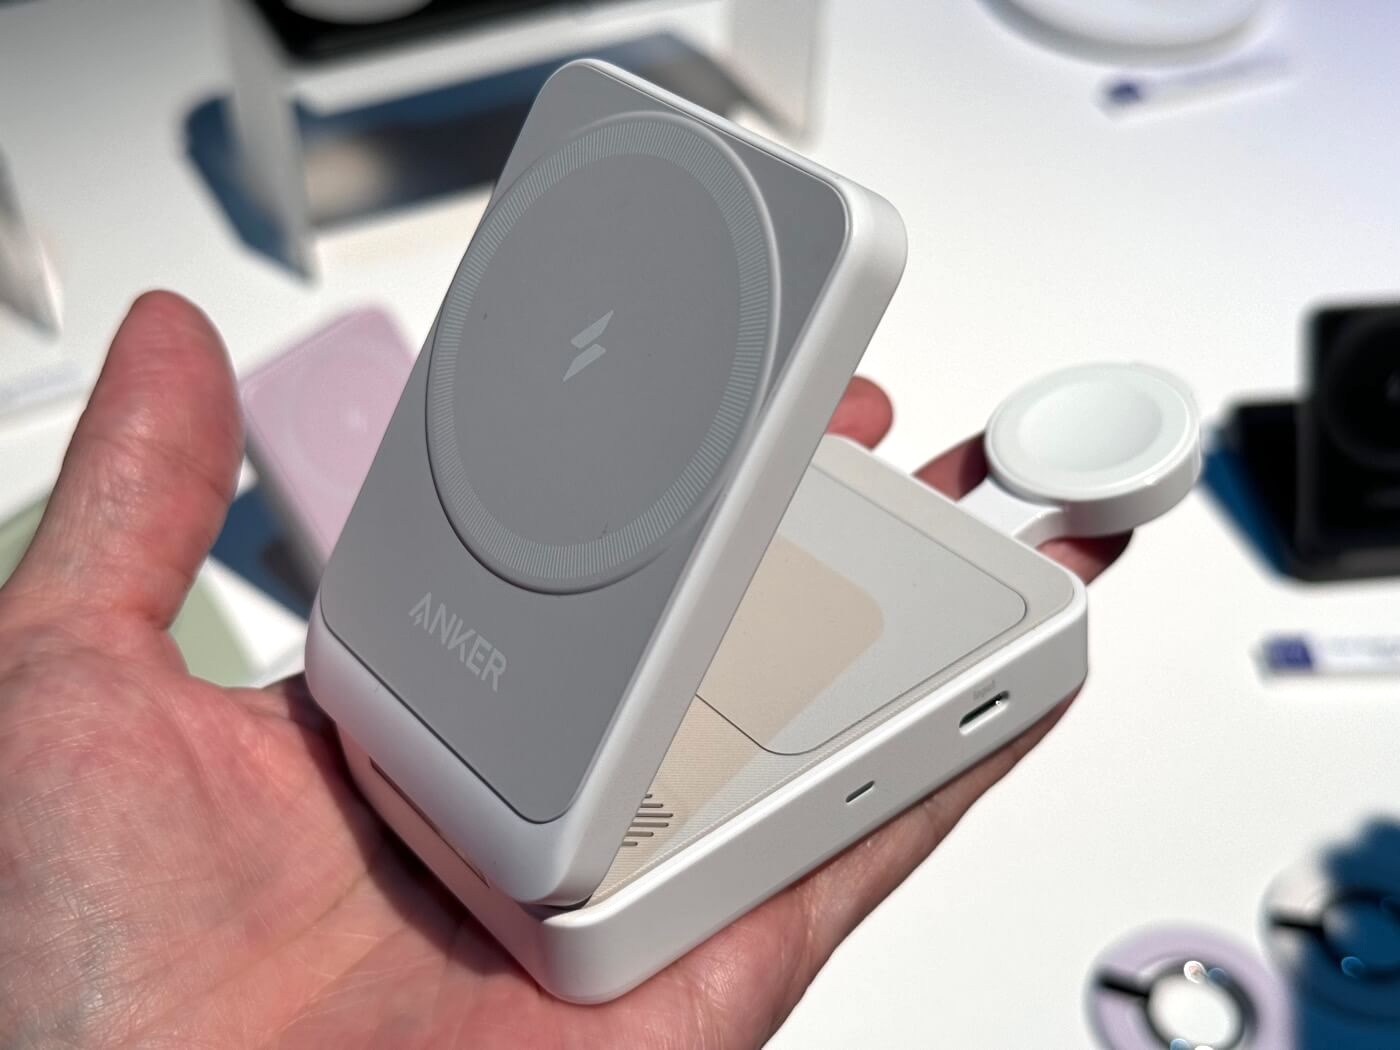 Anker、Qi2認証を取得した3-in-1ワイヤレス充電器｢Anker MagGo Wireless Charging Station(Foldable 3-in-1)｣の予約販売を開始